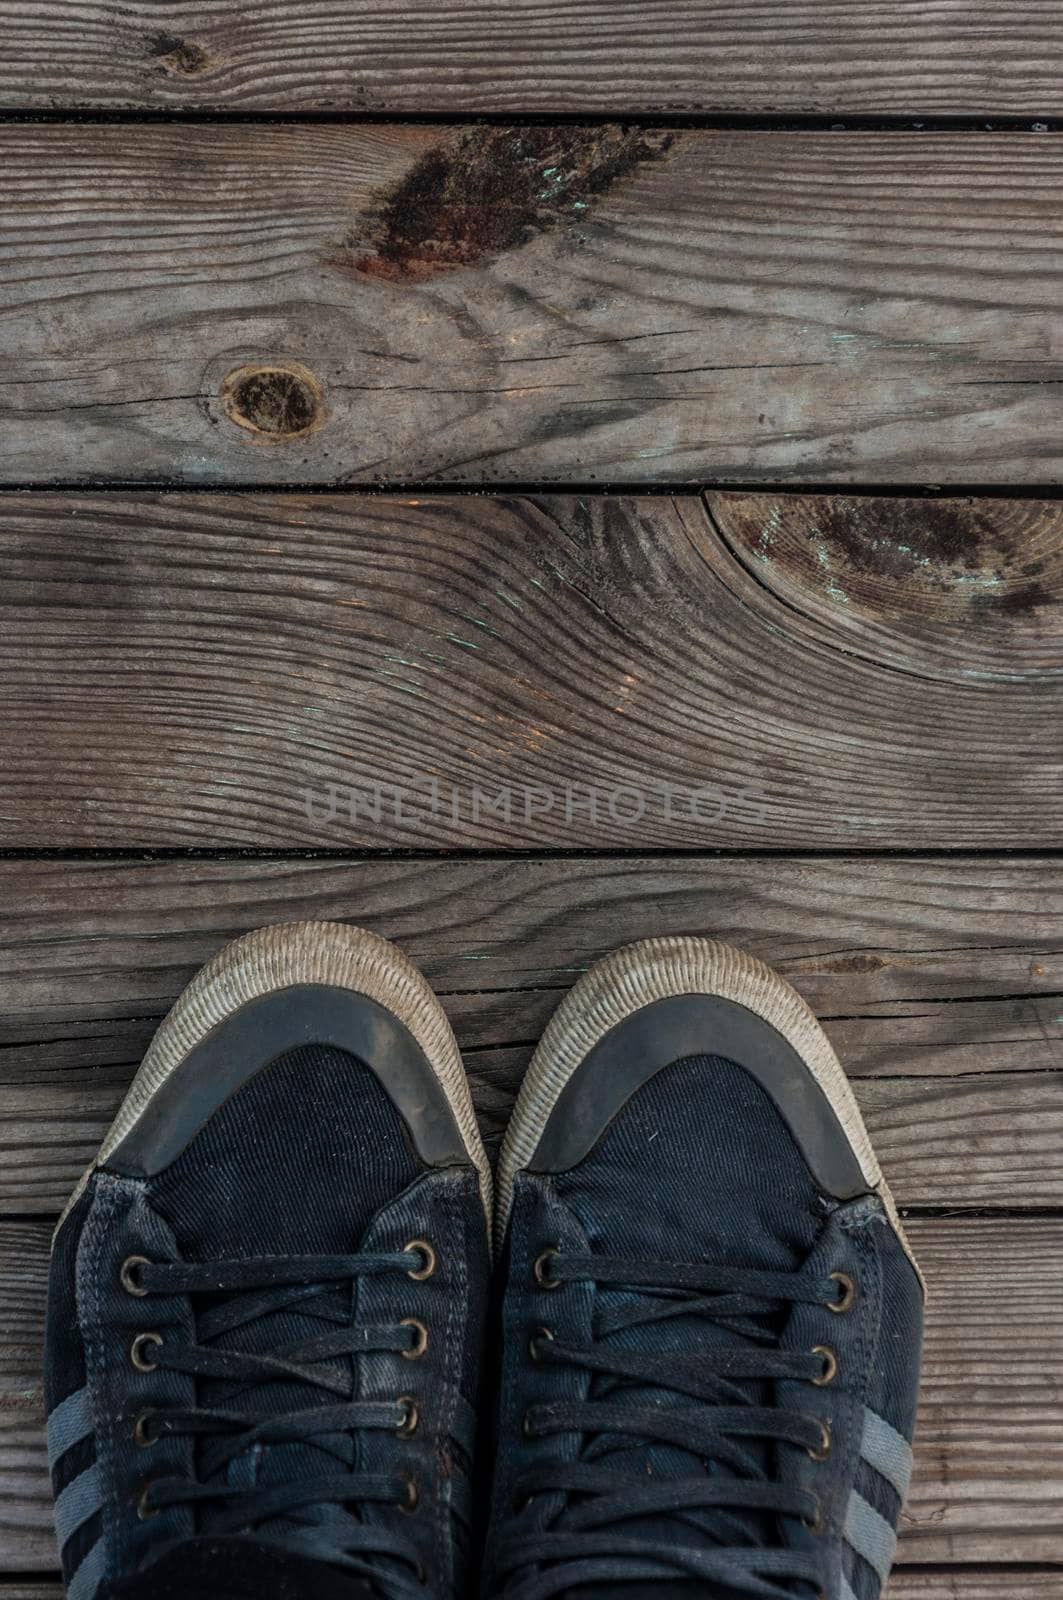 Blue pair sneakers standing on wooden floor. Top view by inxti